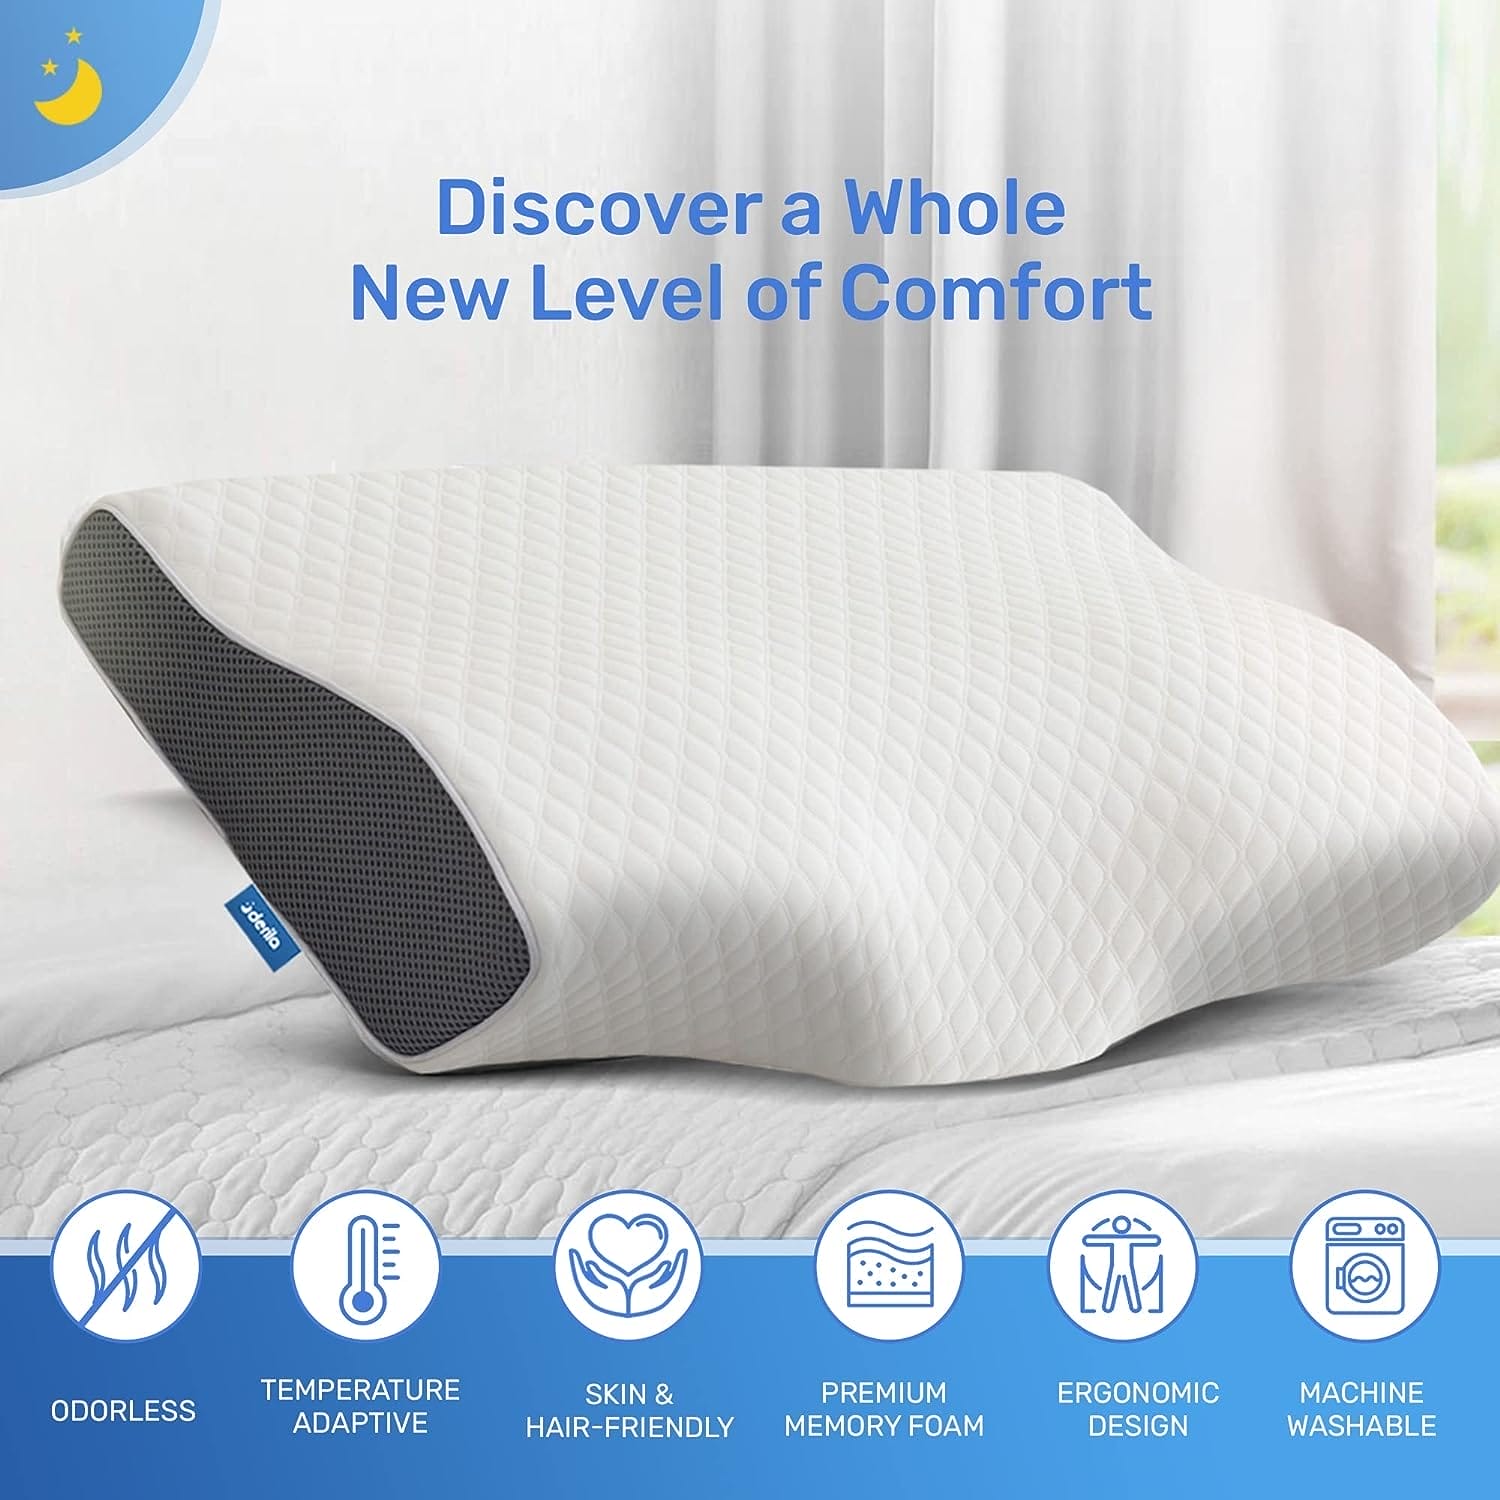 Derila Memory Foam Pillow Review: Worth the Upgrade?